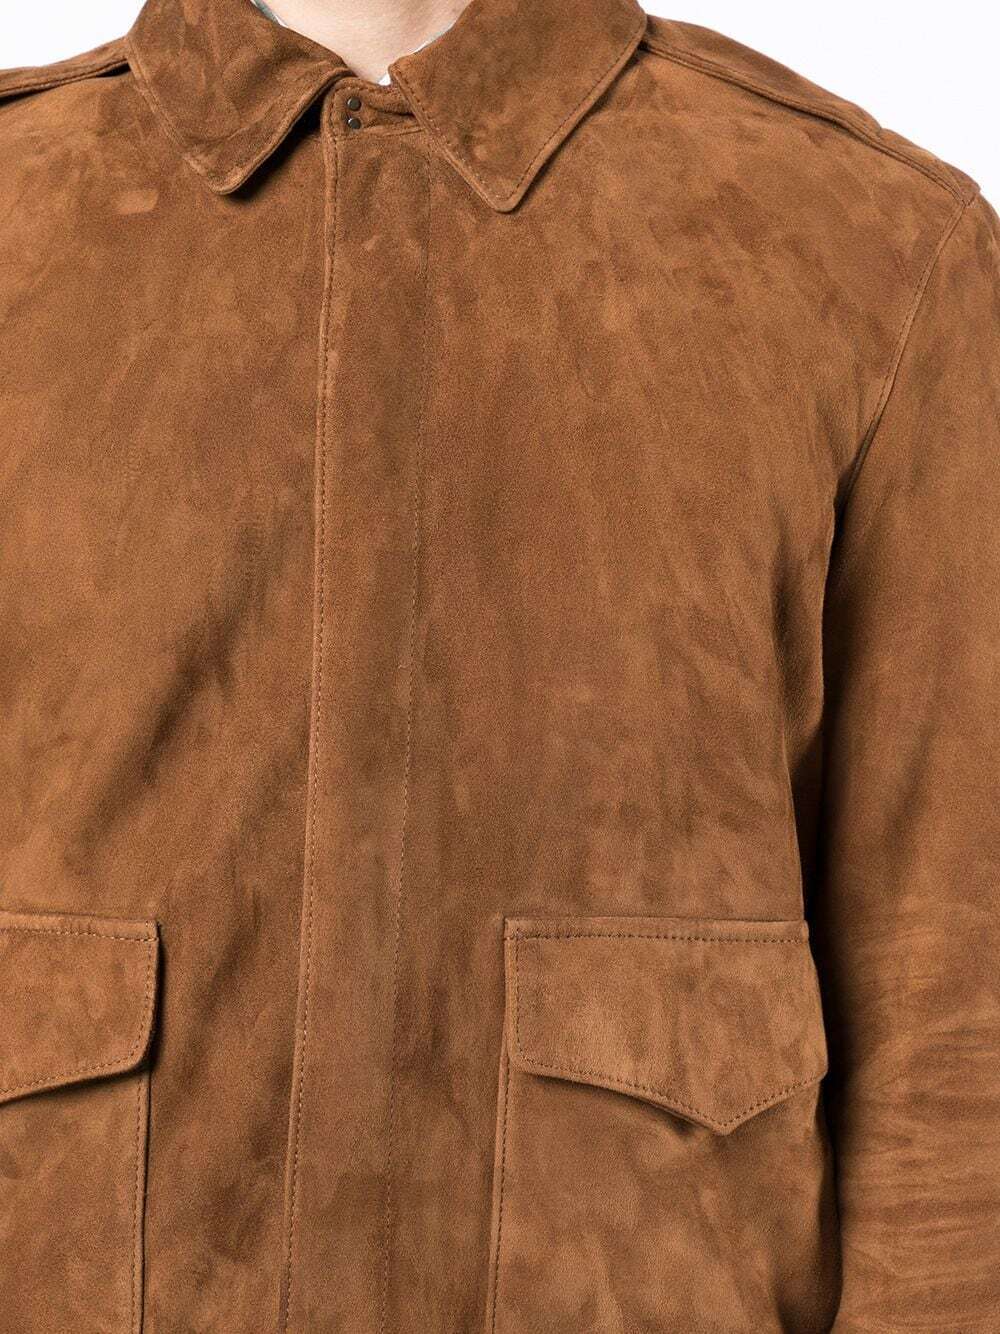 Polo Ralph Lauren Men's Suede Leather Bomber Jacket Size XL – Alps